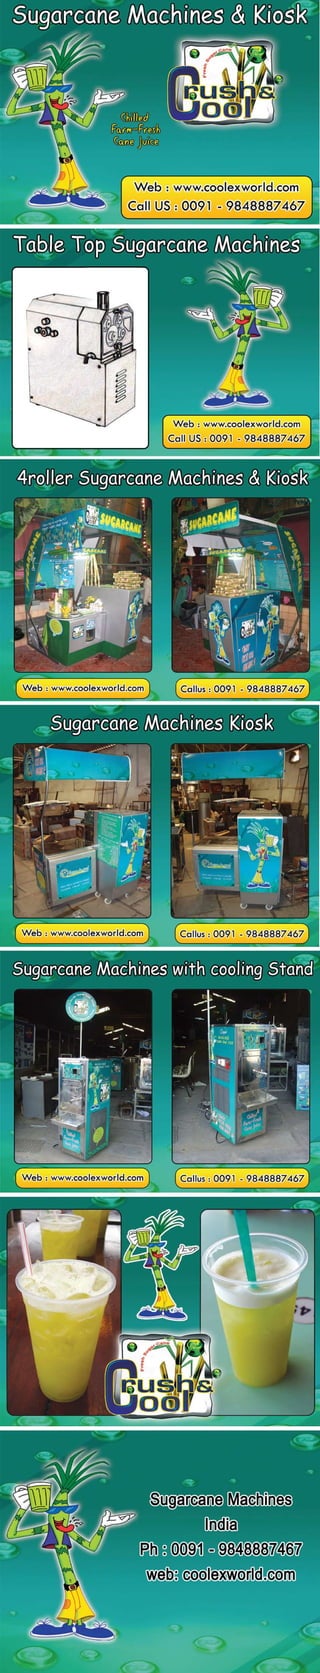 Sugarcane machines hyderabad